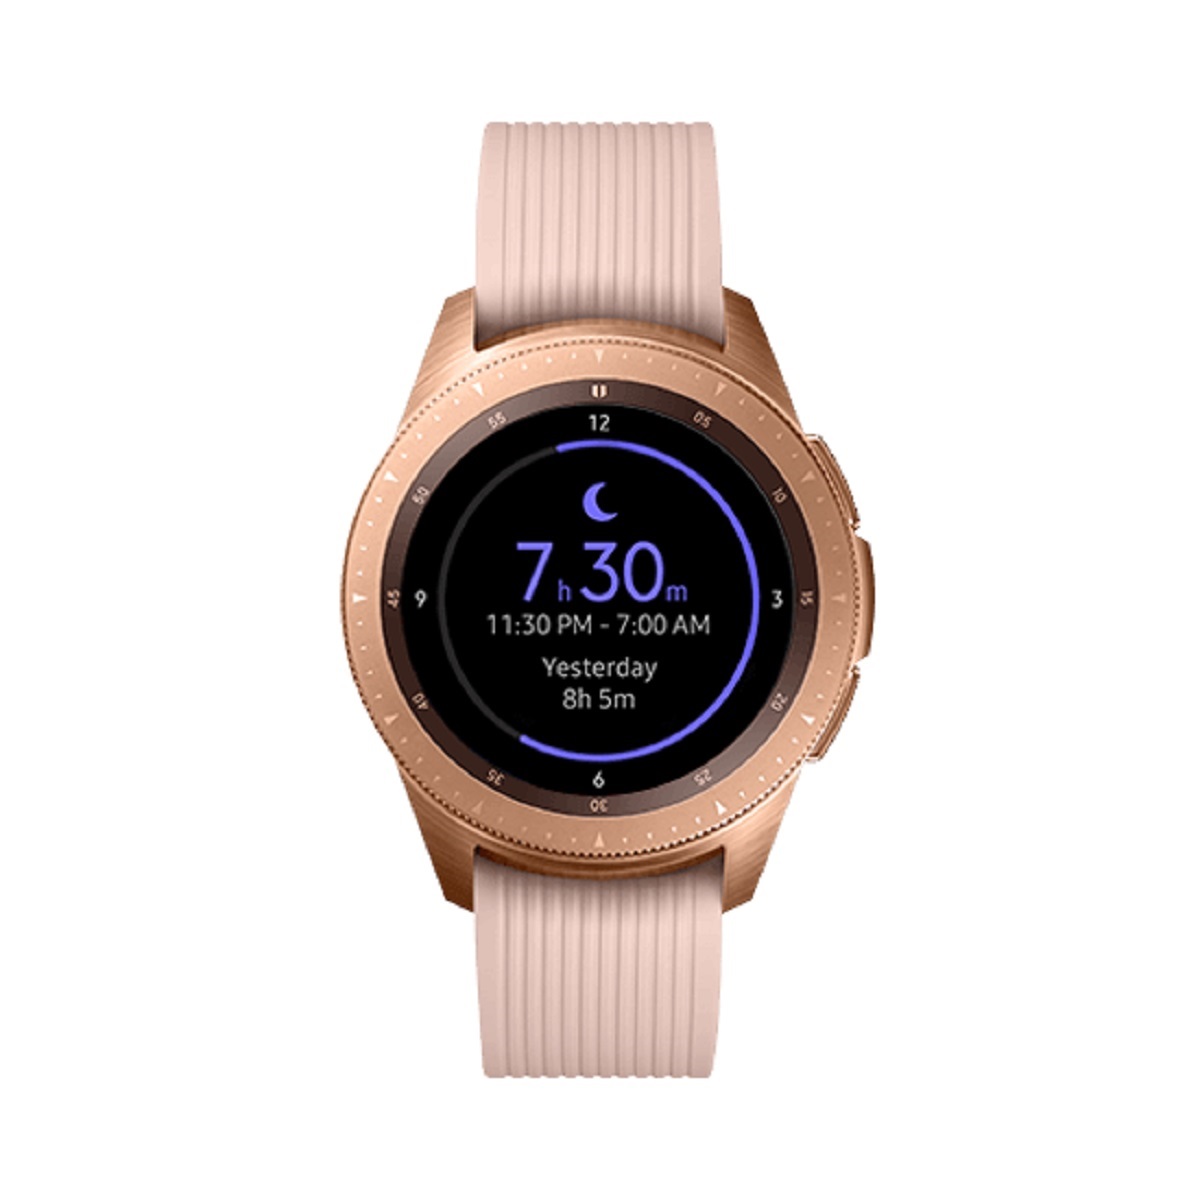 Galaxy watch золото. Samsung Galaxy watch 42mm Rose золотой. Samsung Galaxy watch SM-r810. Смарт-часы Samsung Galaxy watch 46 mm Gold. Часы самсунг Galaxy 42mm розовое.